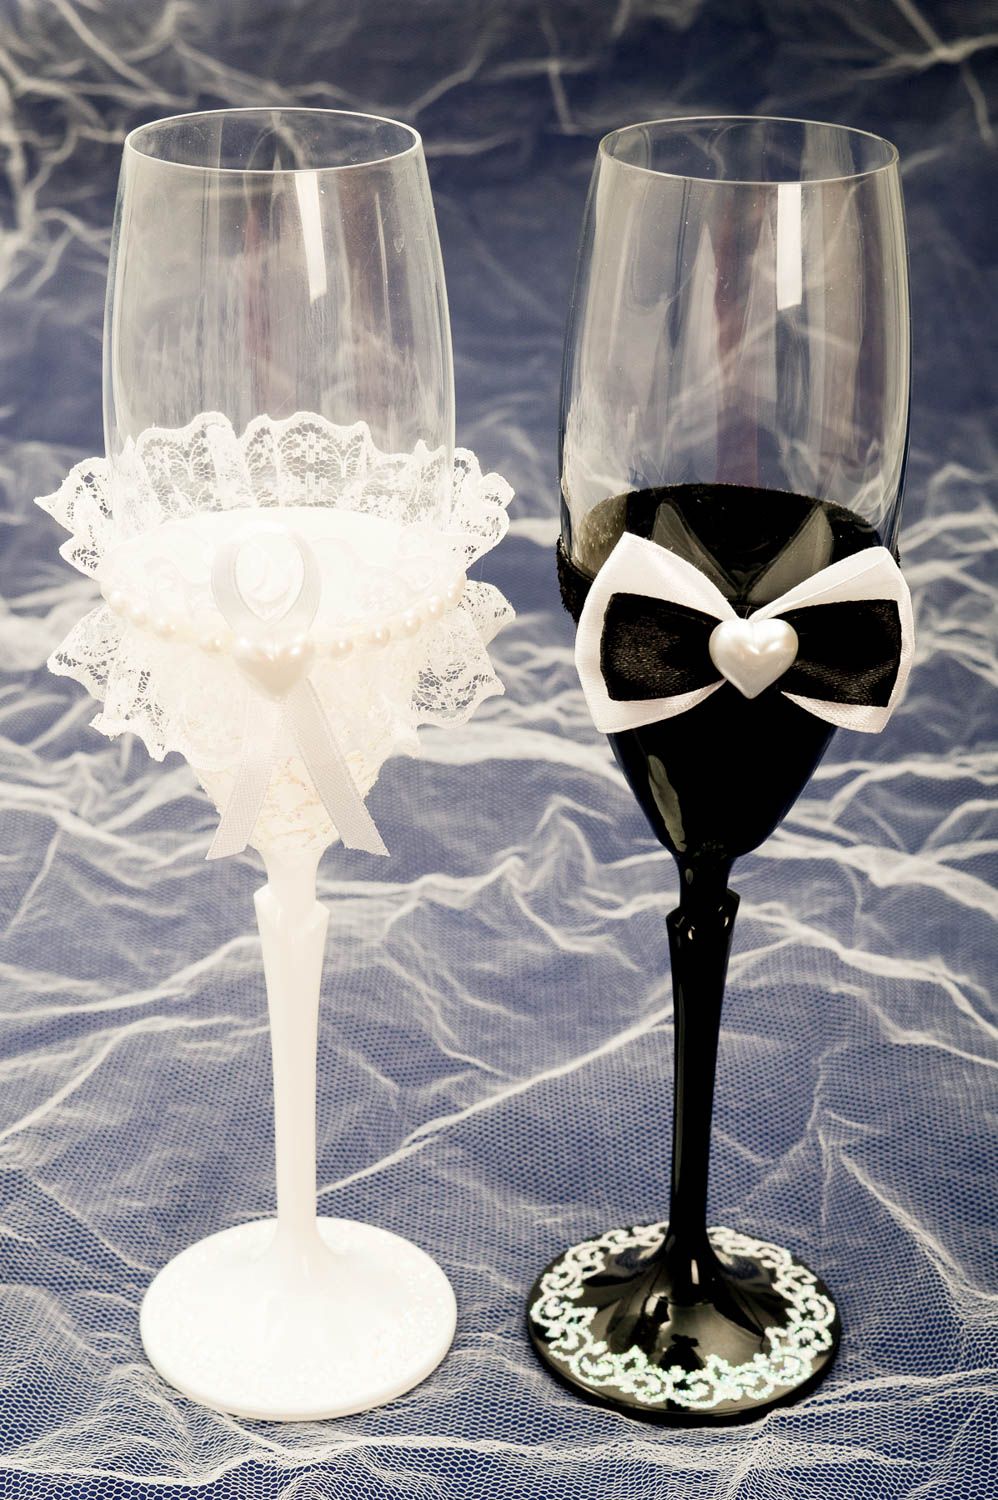 Handmade glasses designer glasses unusual wedding glasses gift ideas table decor photo 1